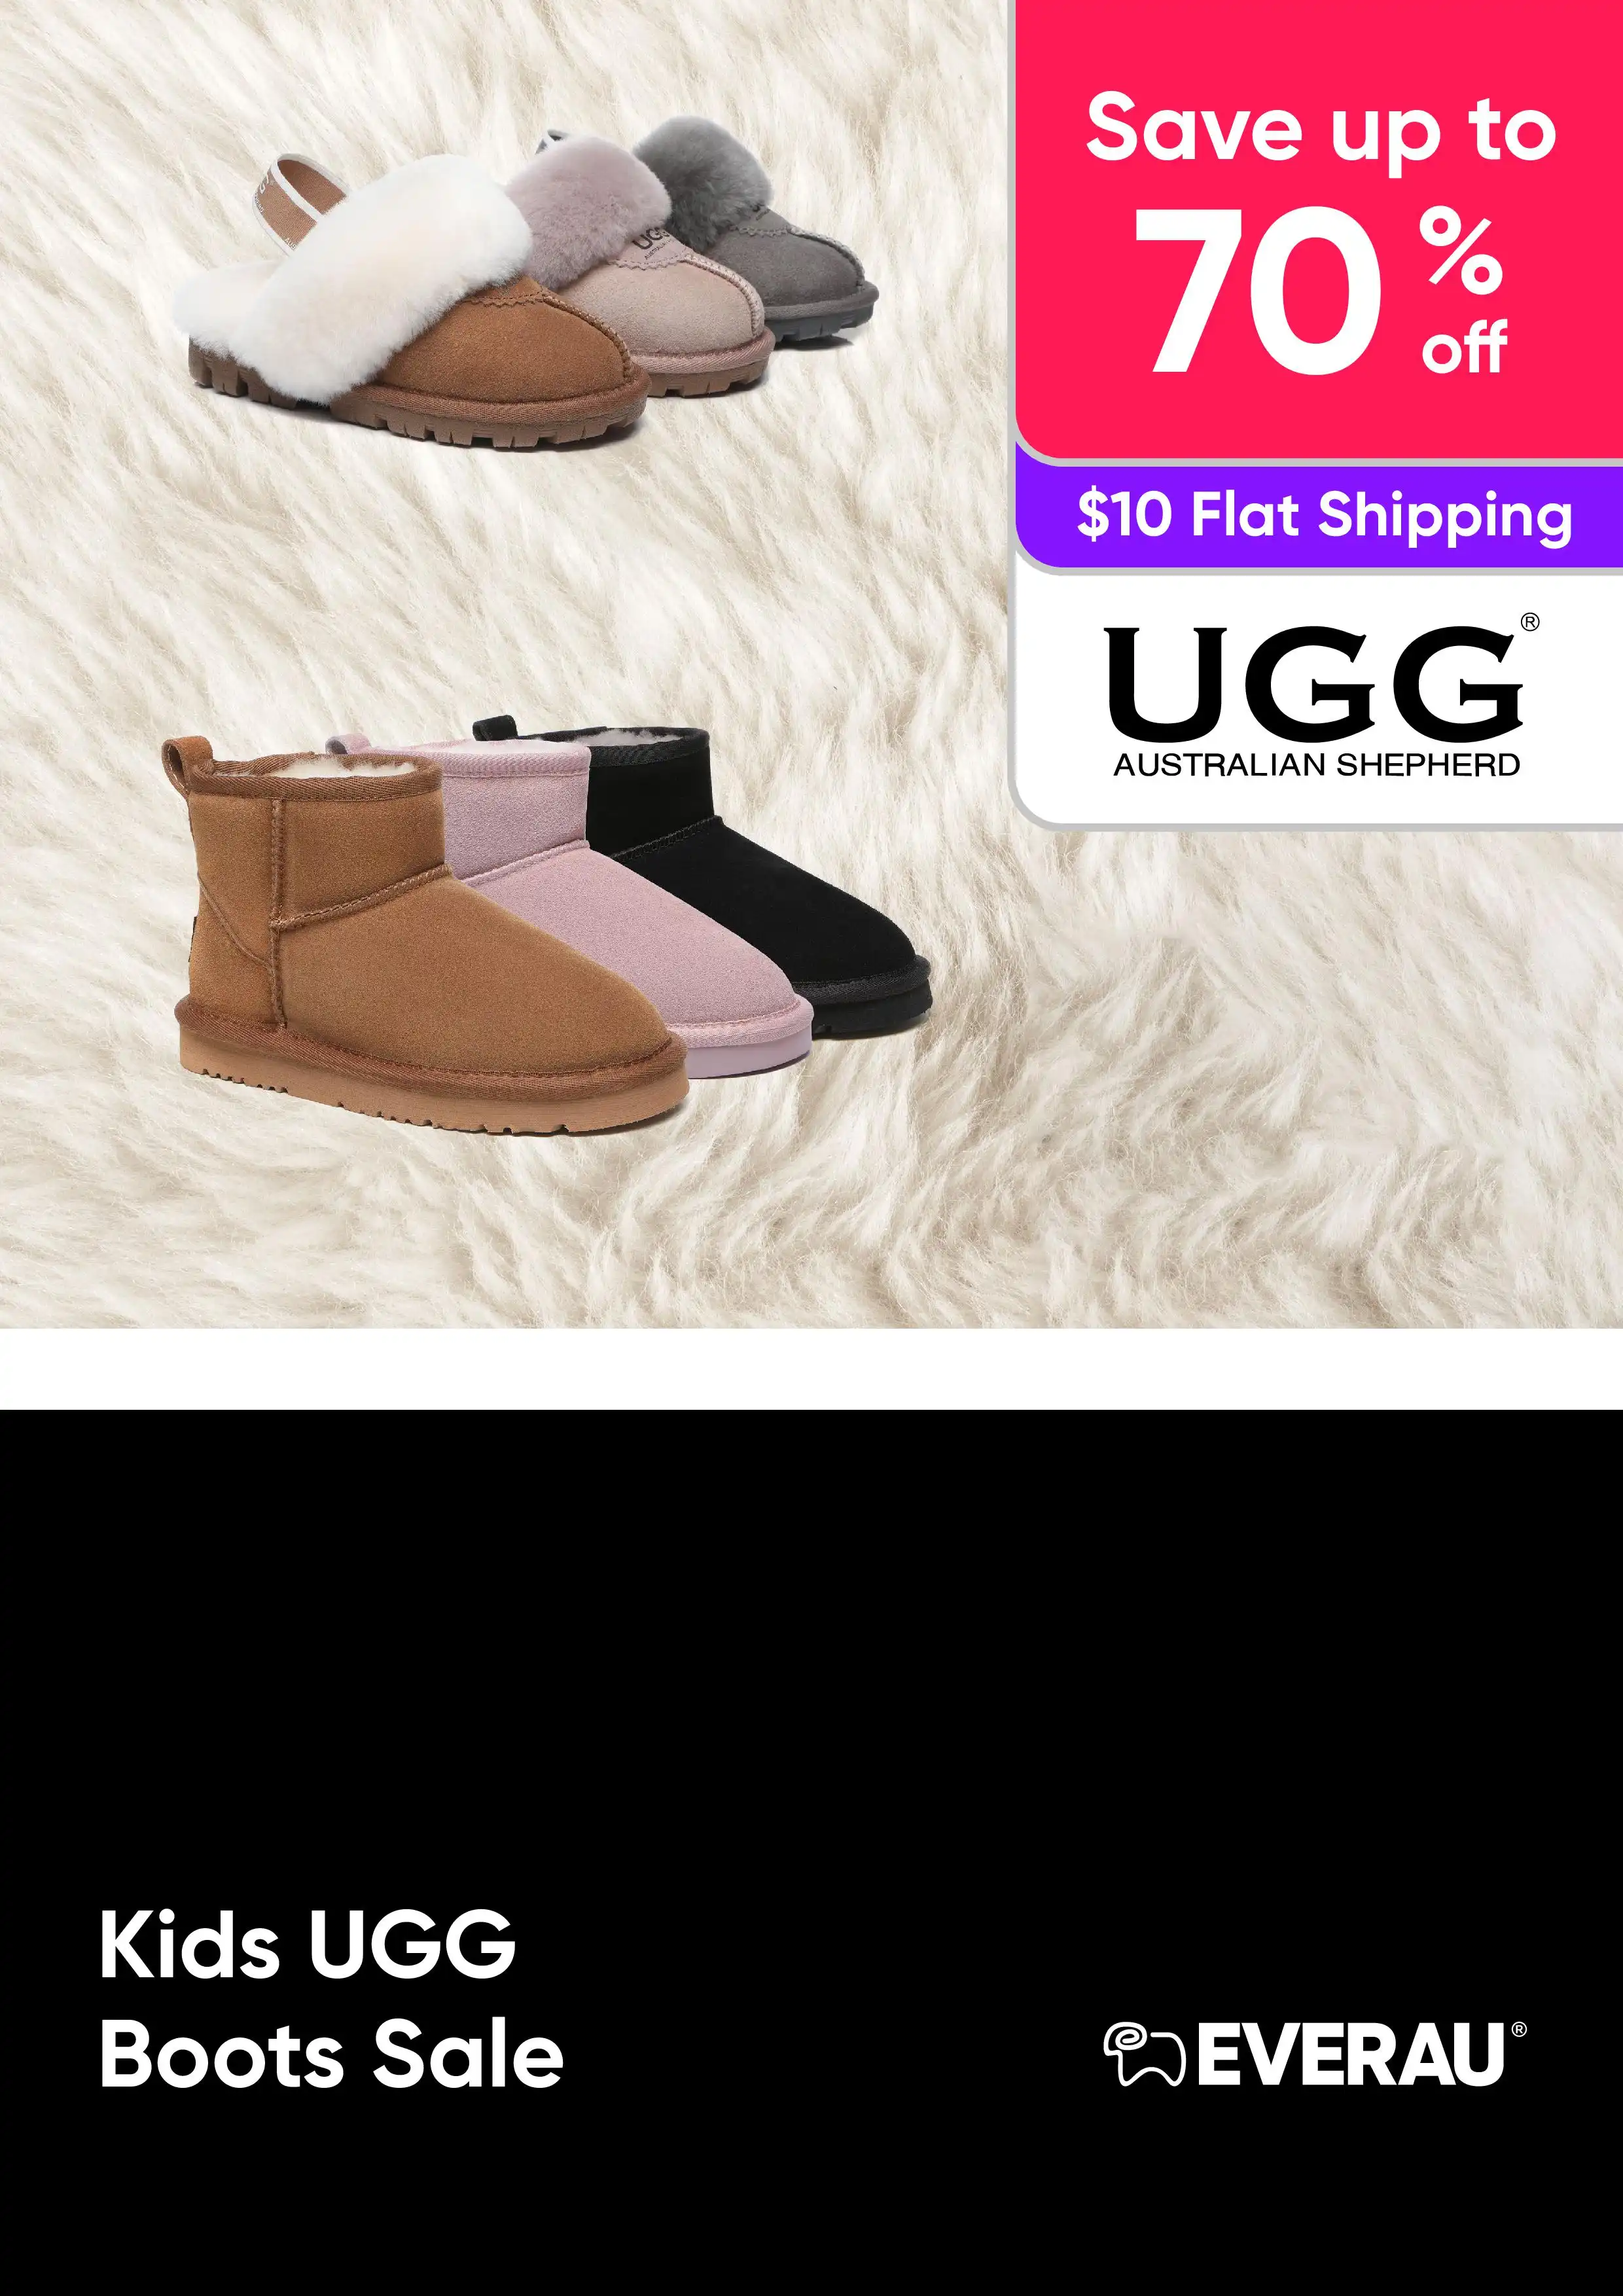 Kids UGG Boots Sale - UGG Australian Shepherd - Save up to 70% off